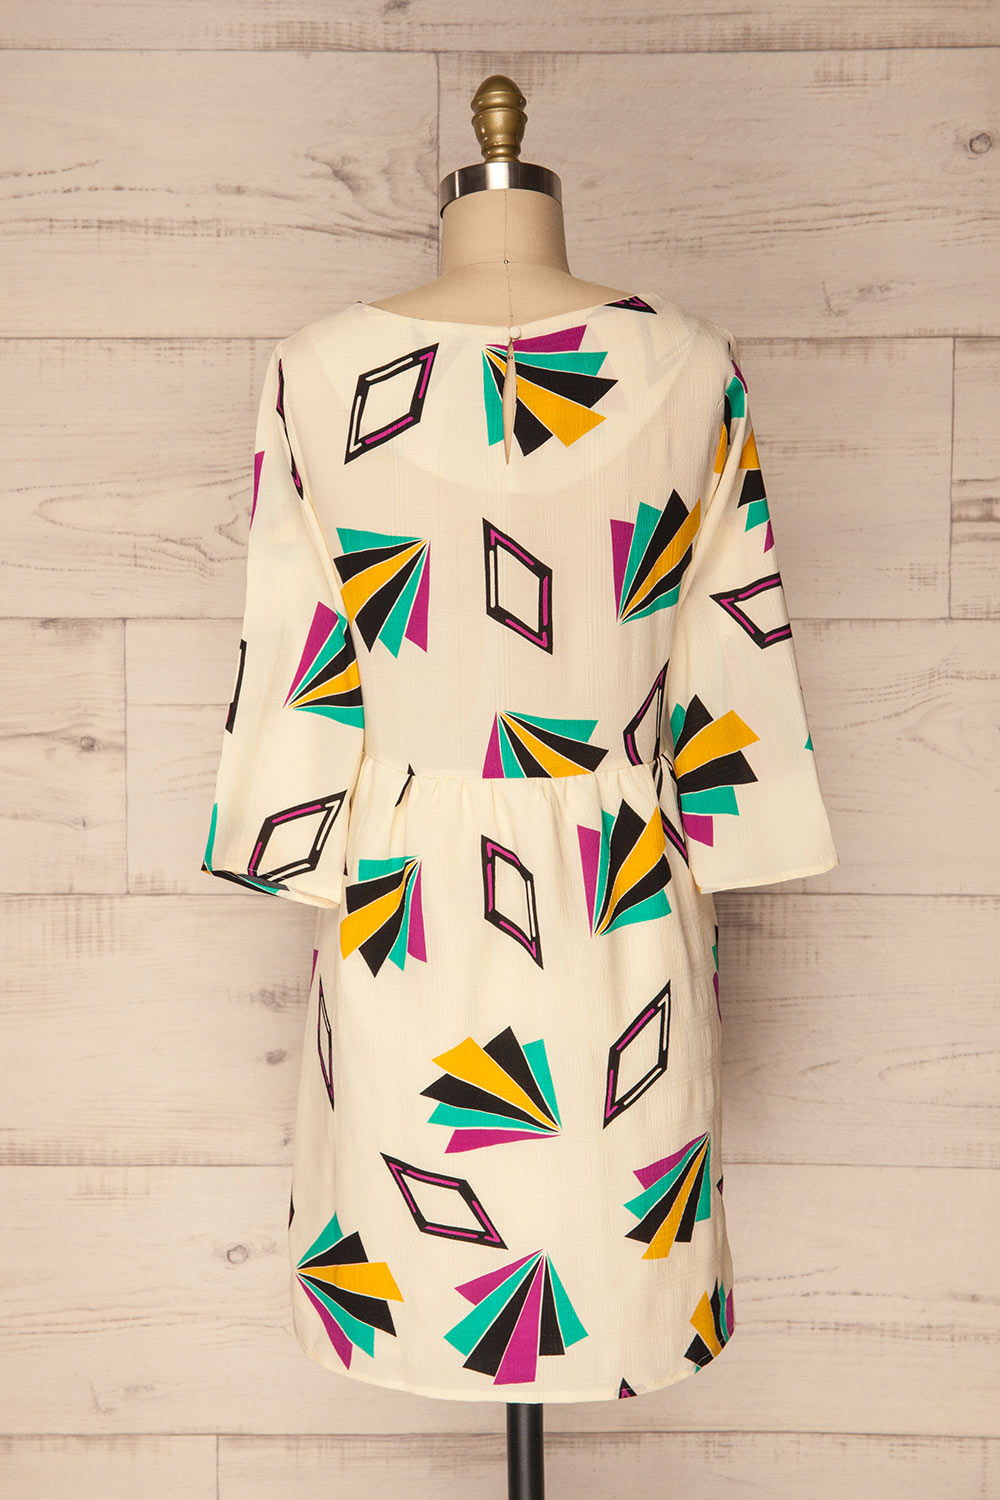 Bapska Colourfully Patterned Short A-Line Dress | La Petite Garçonne 5